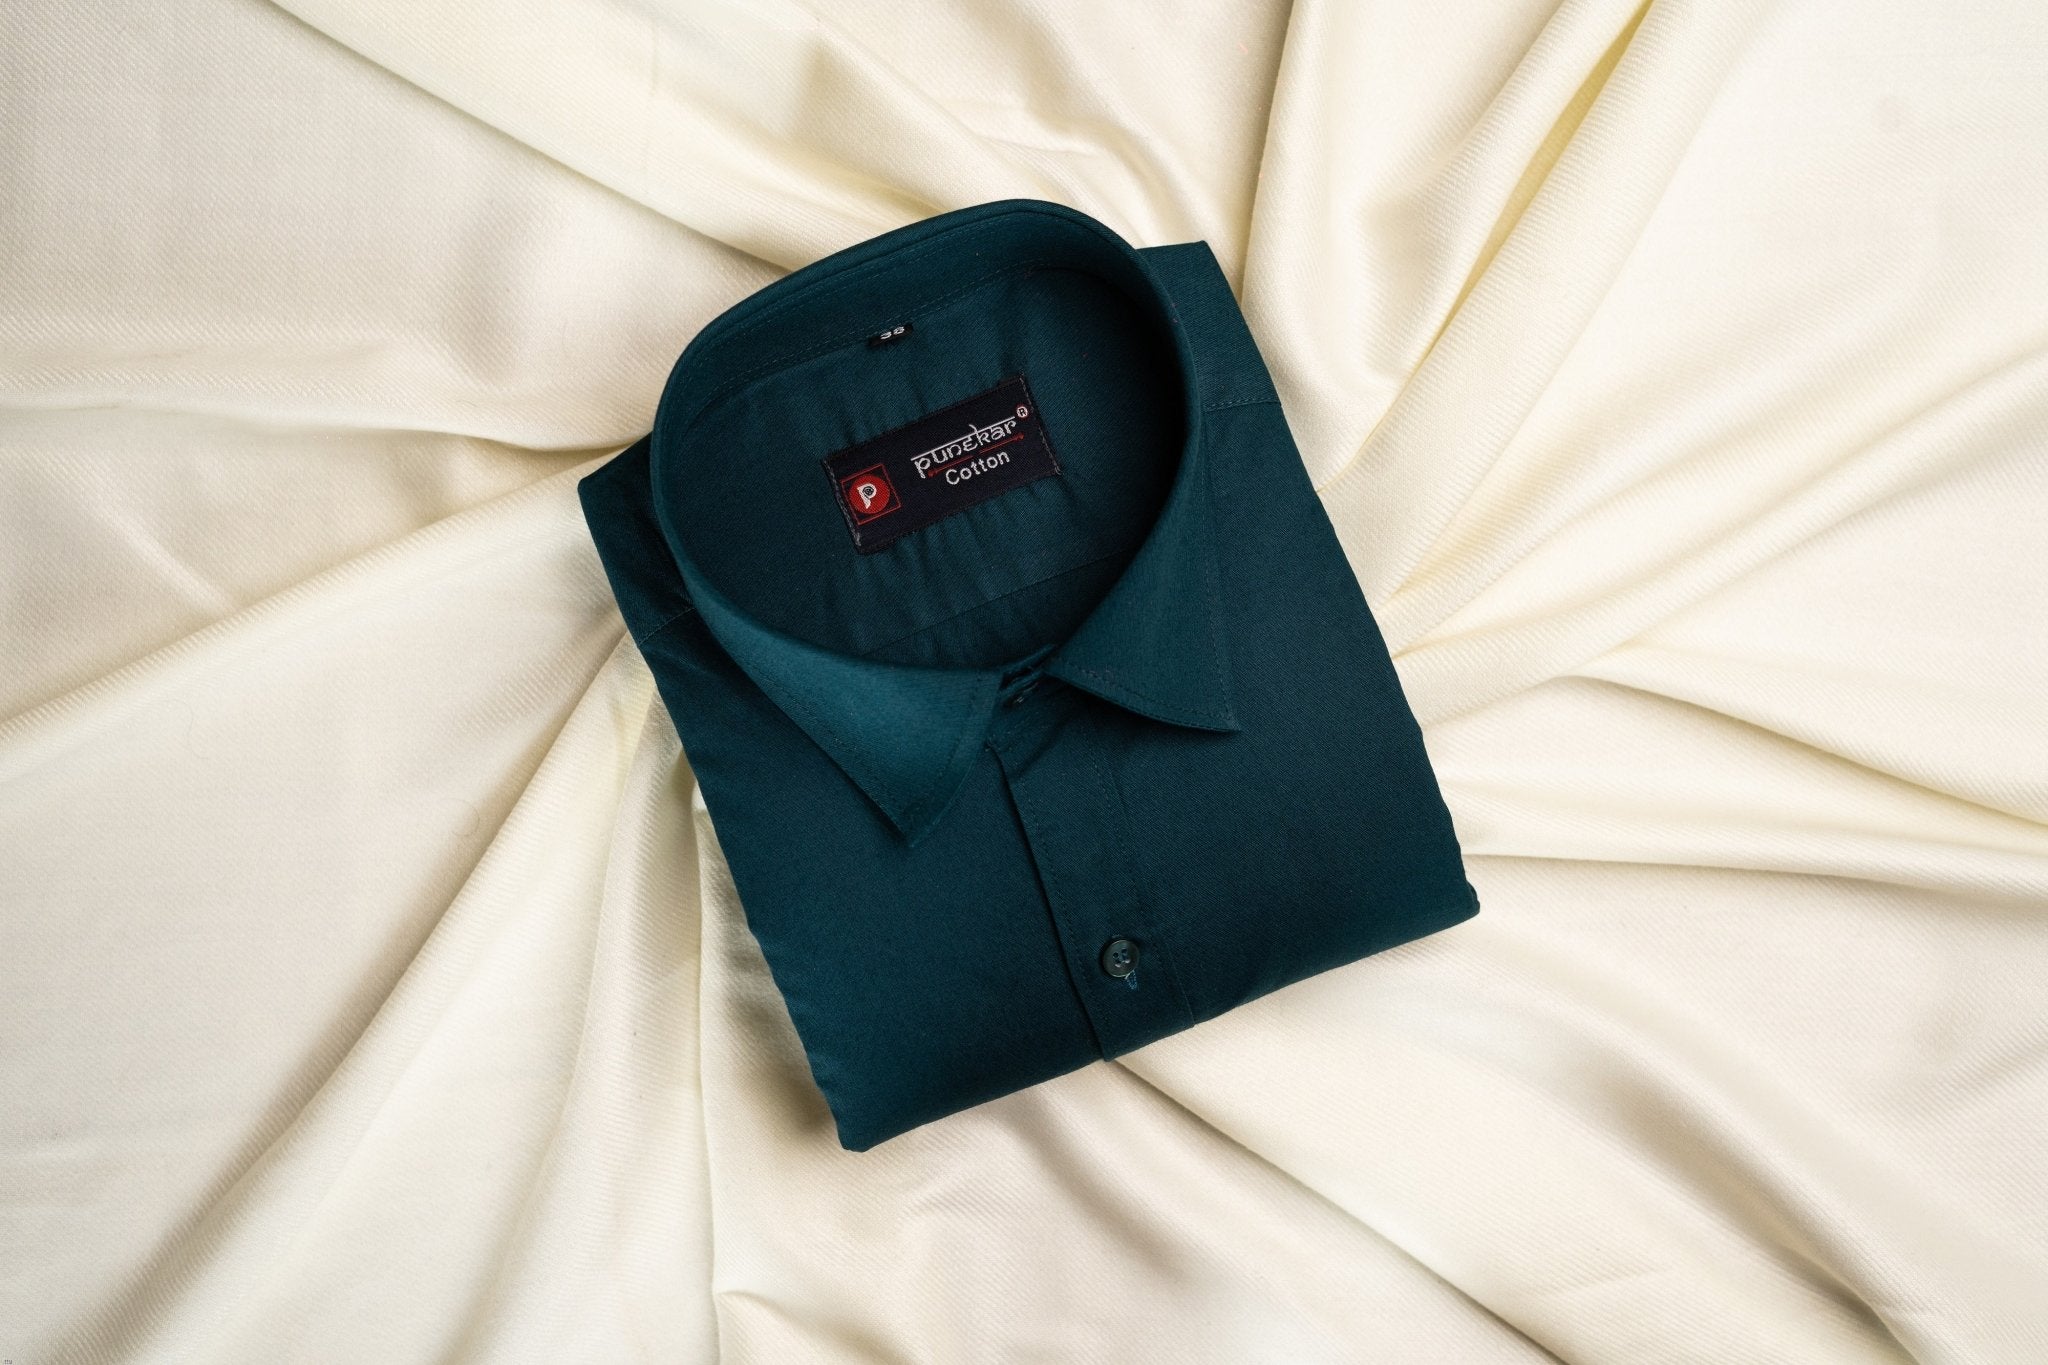 Punekar Cotton Forest Green Color 100% Mercerised Cotton Diagonally Woven Formal Shirt for Men&